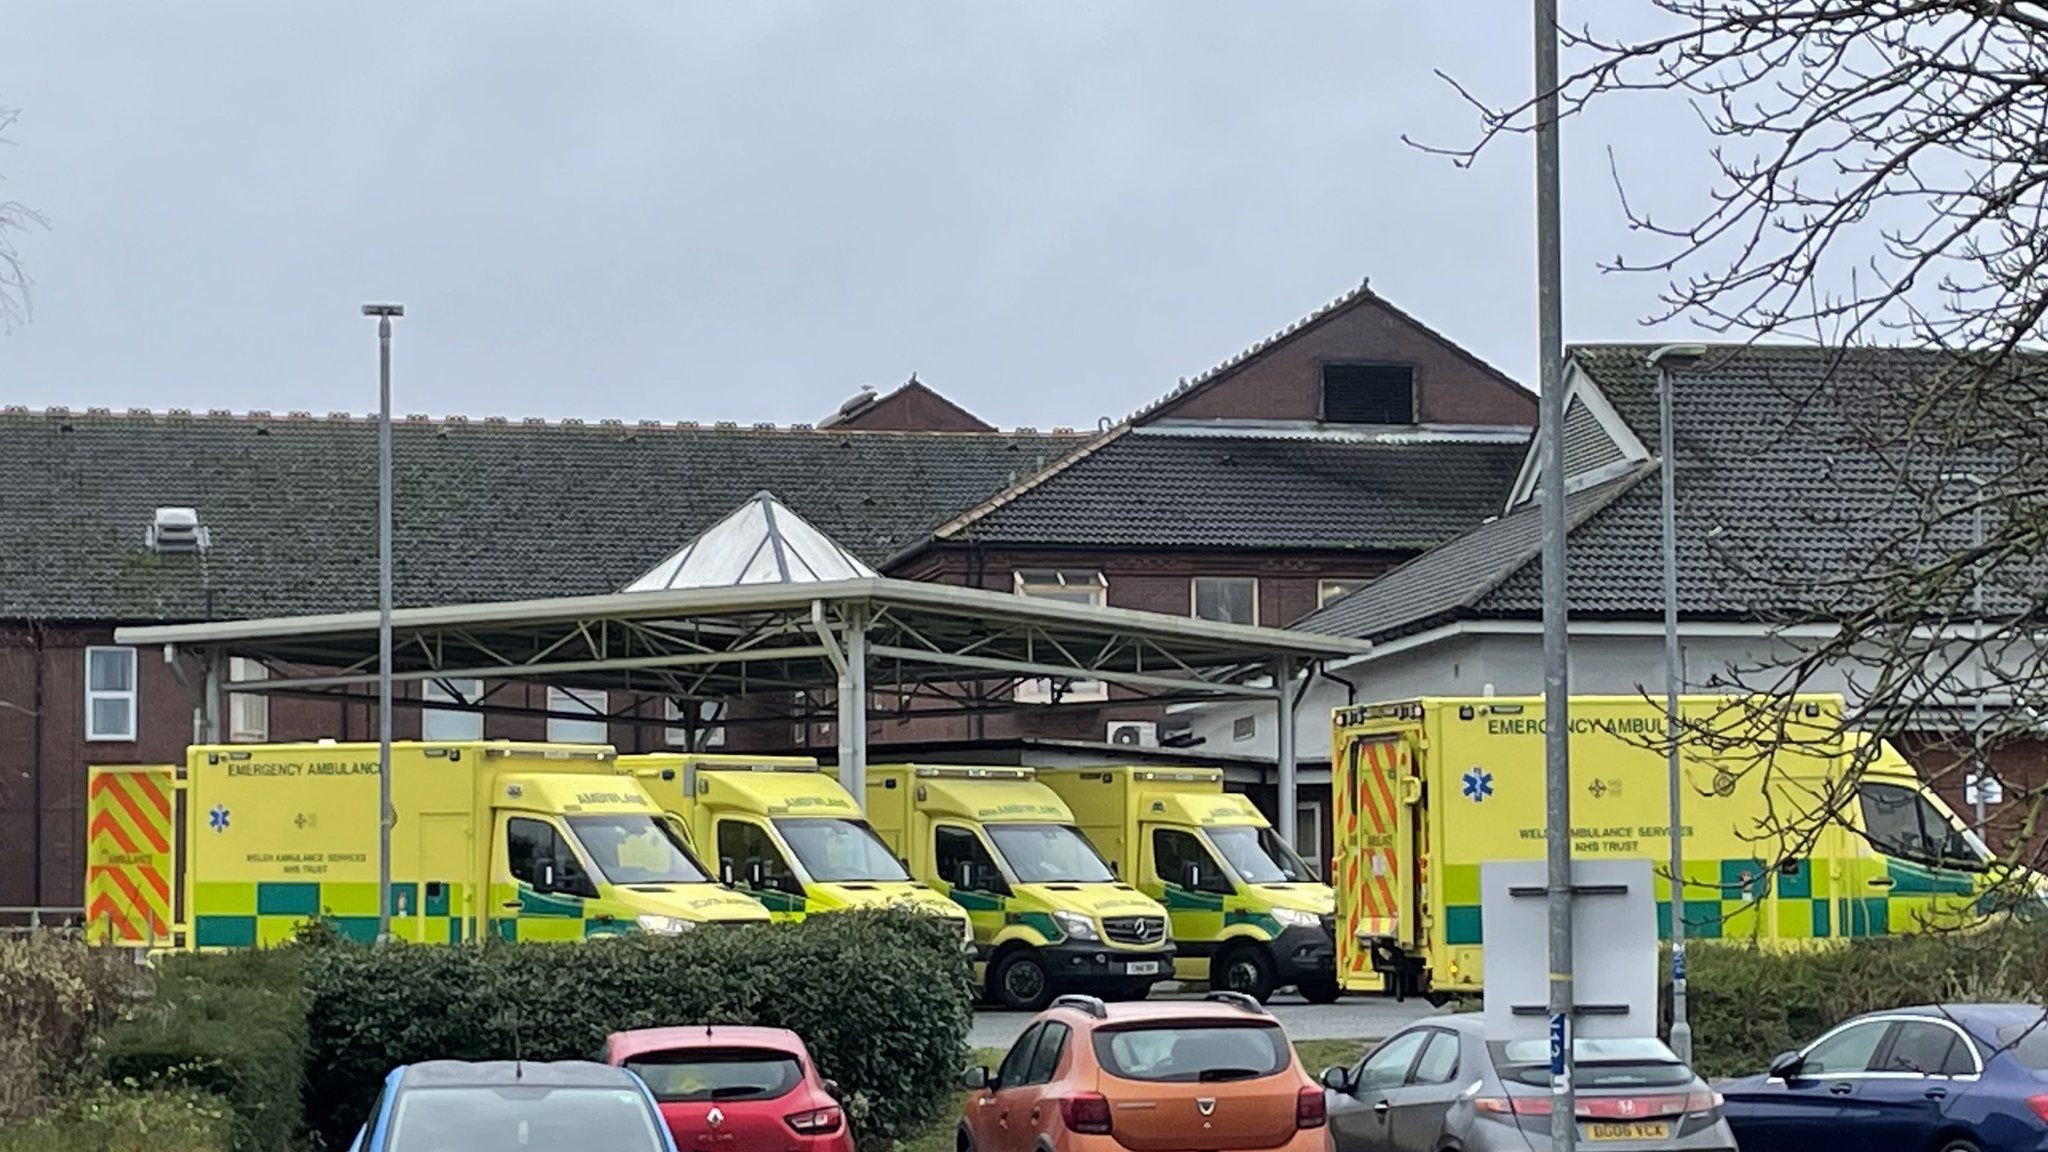 Ambulances outside Wrexham Maelor